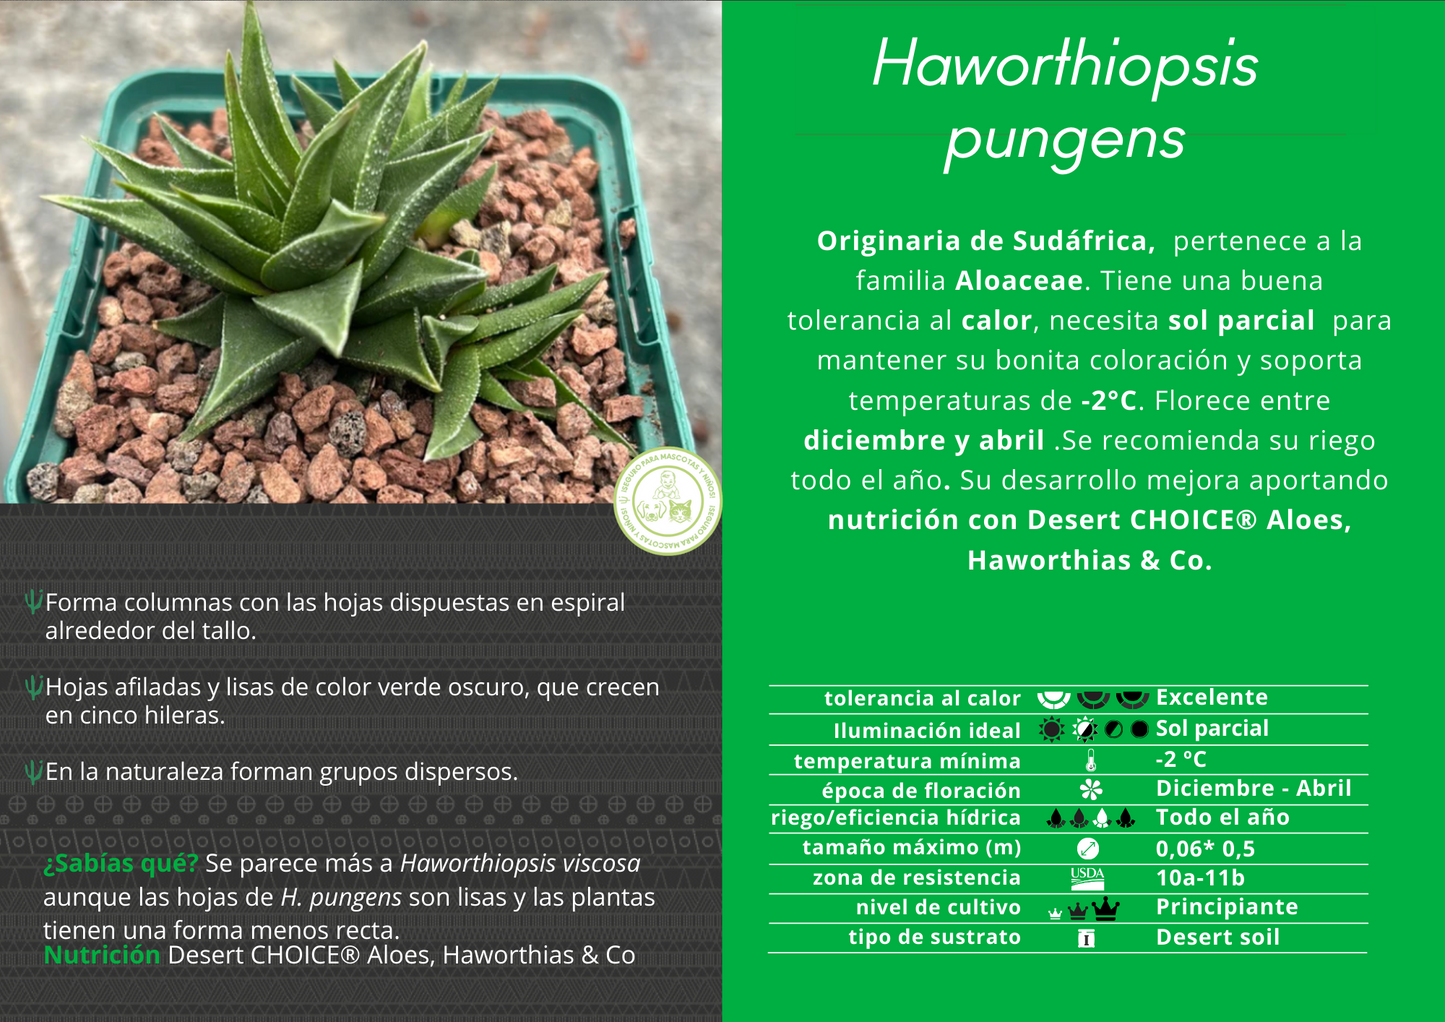 Haworthiopsis pungens